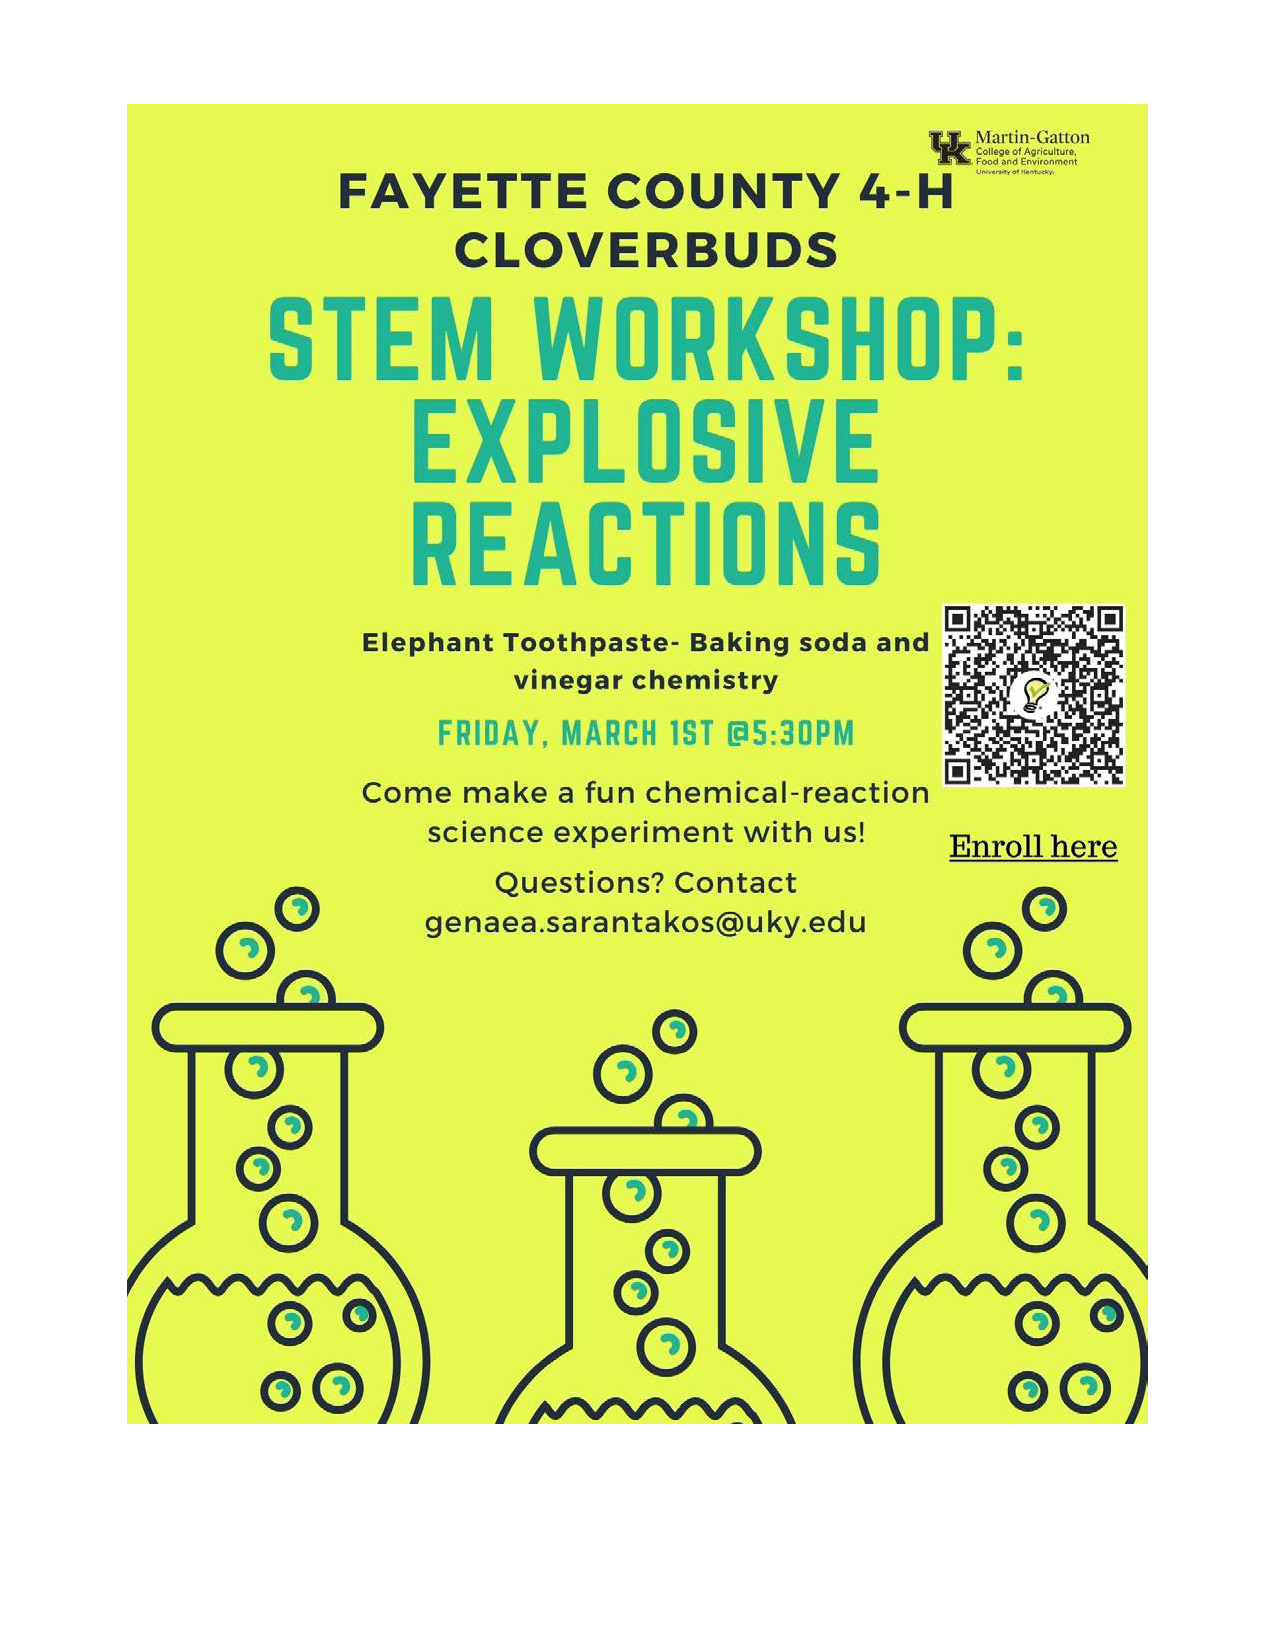 cloverbuds stem explosive reactions